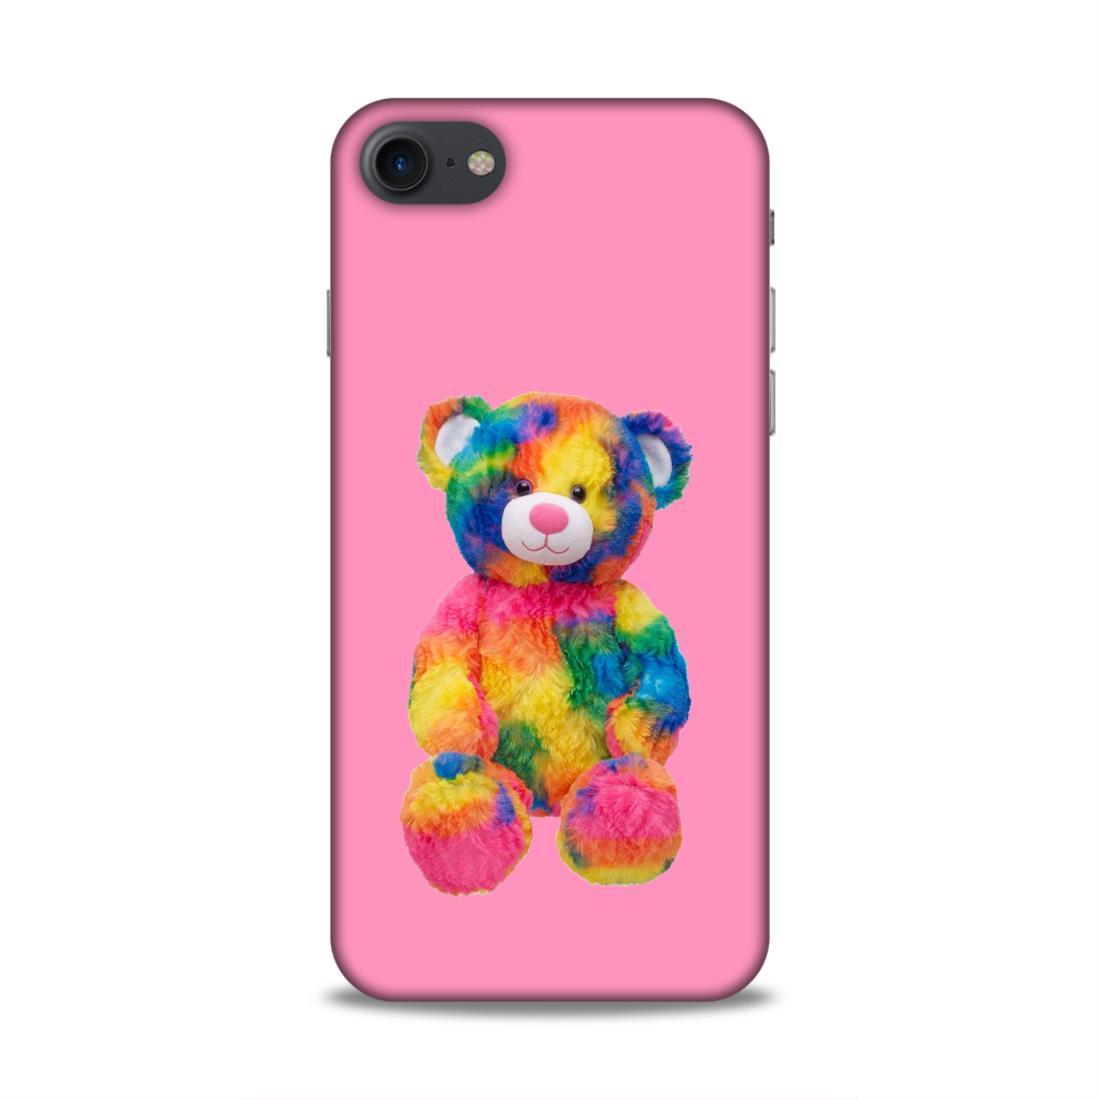 Multicolour Teddy Bear iPhone 7 Mobile Case Cover